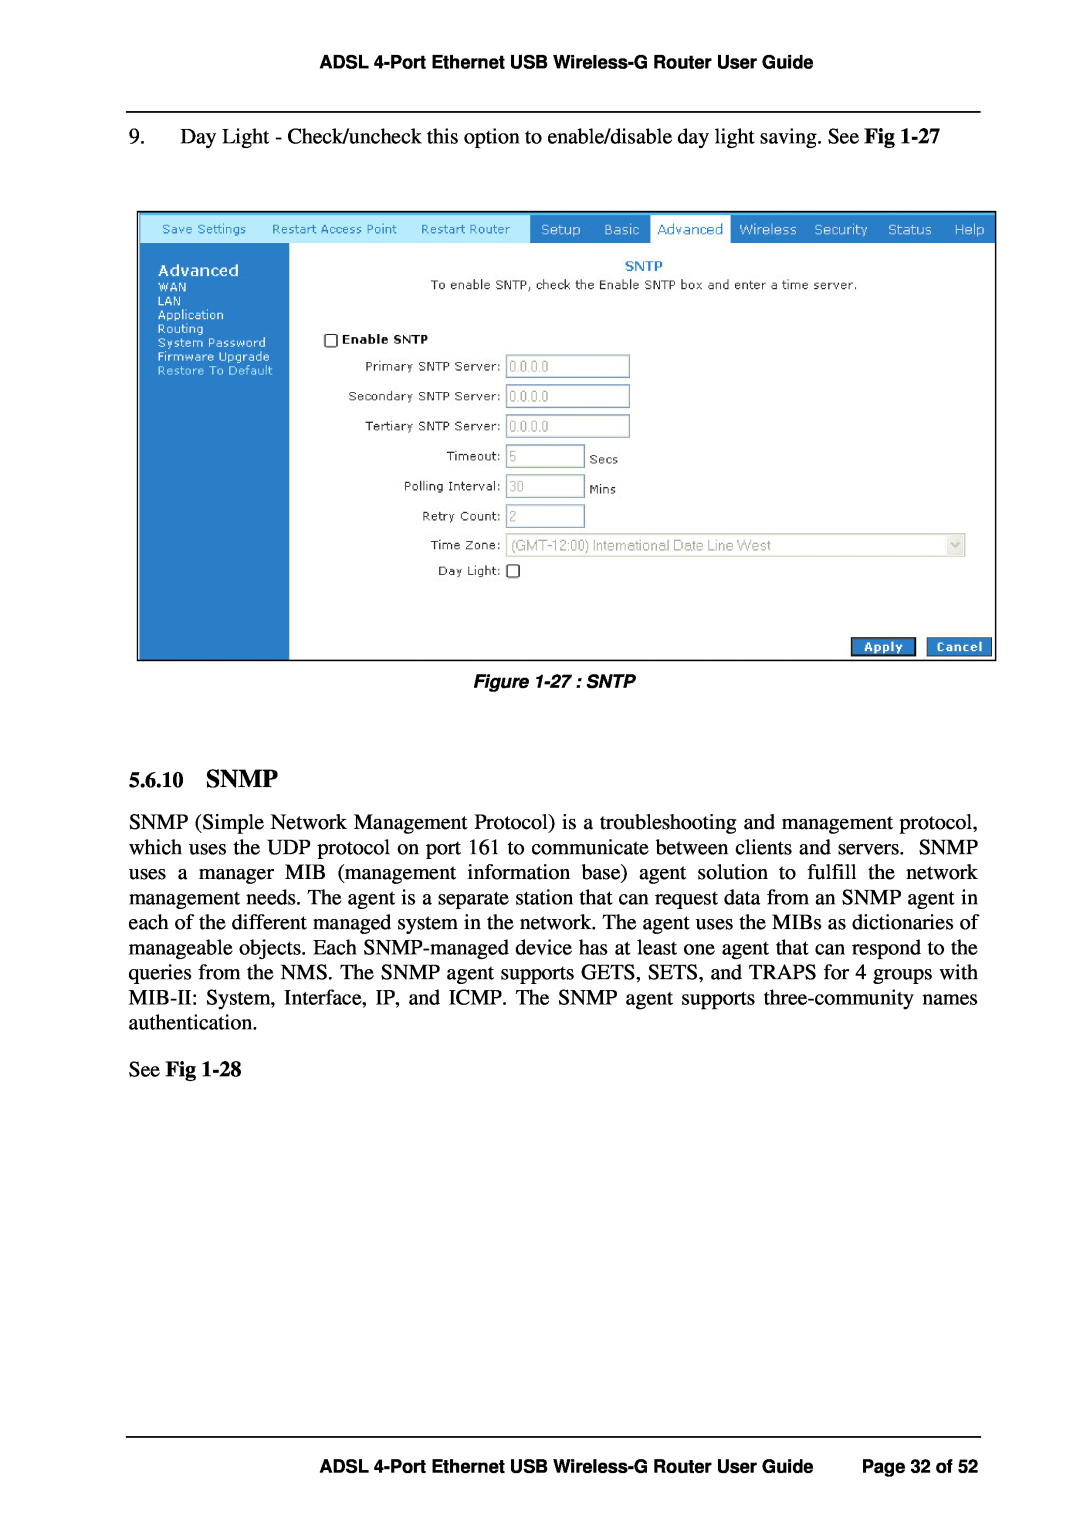 APC ADSL 4-Port manual Snmp, See Fig 